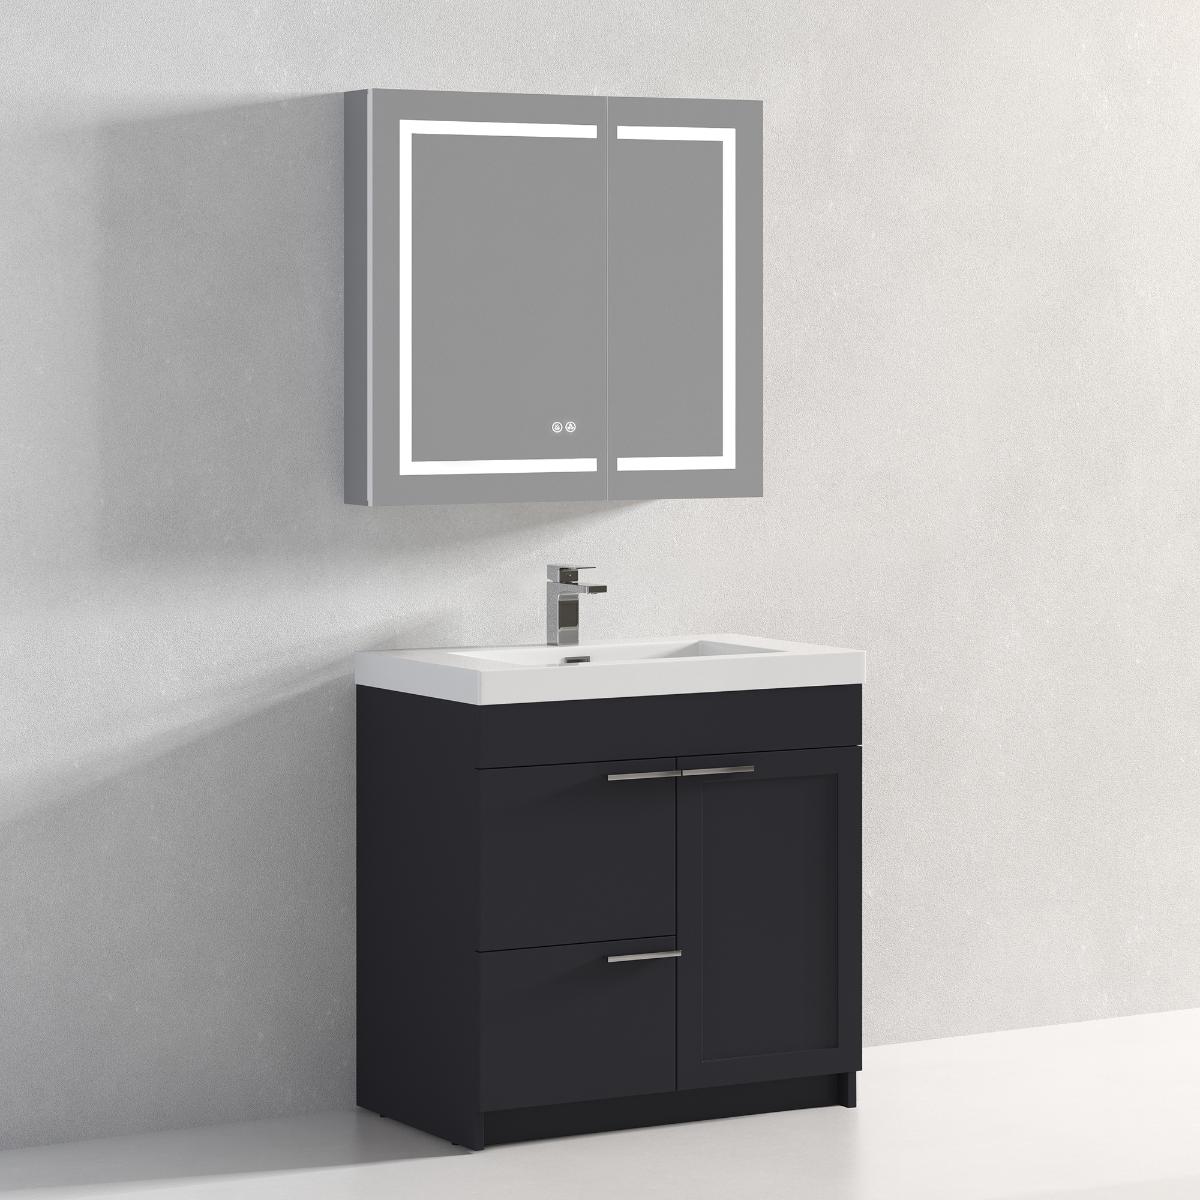 Hanover 36" Bathroom Vanity  #size_36"  #color_charcoal